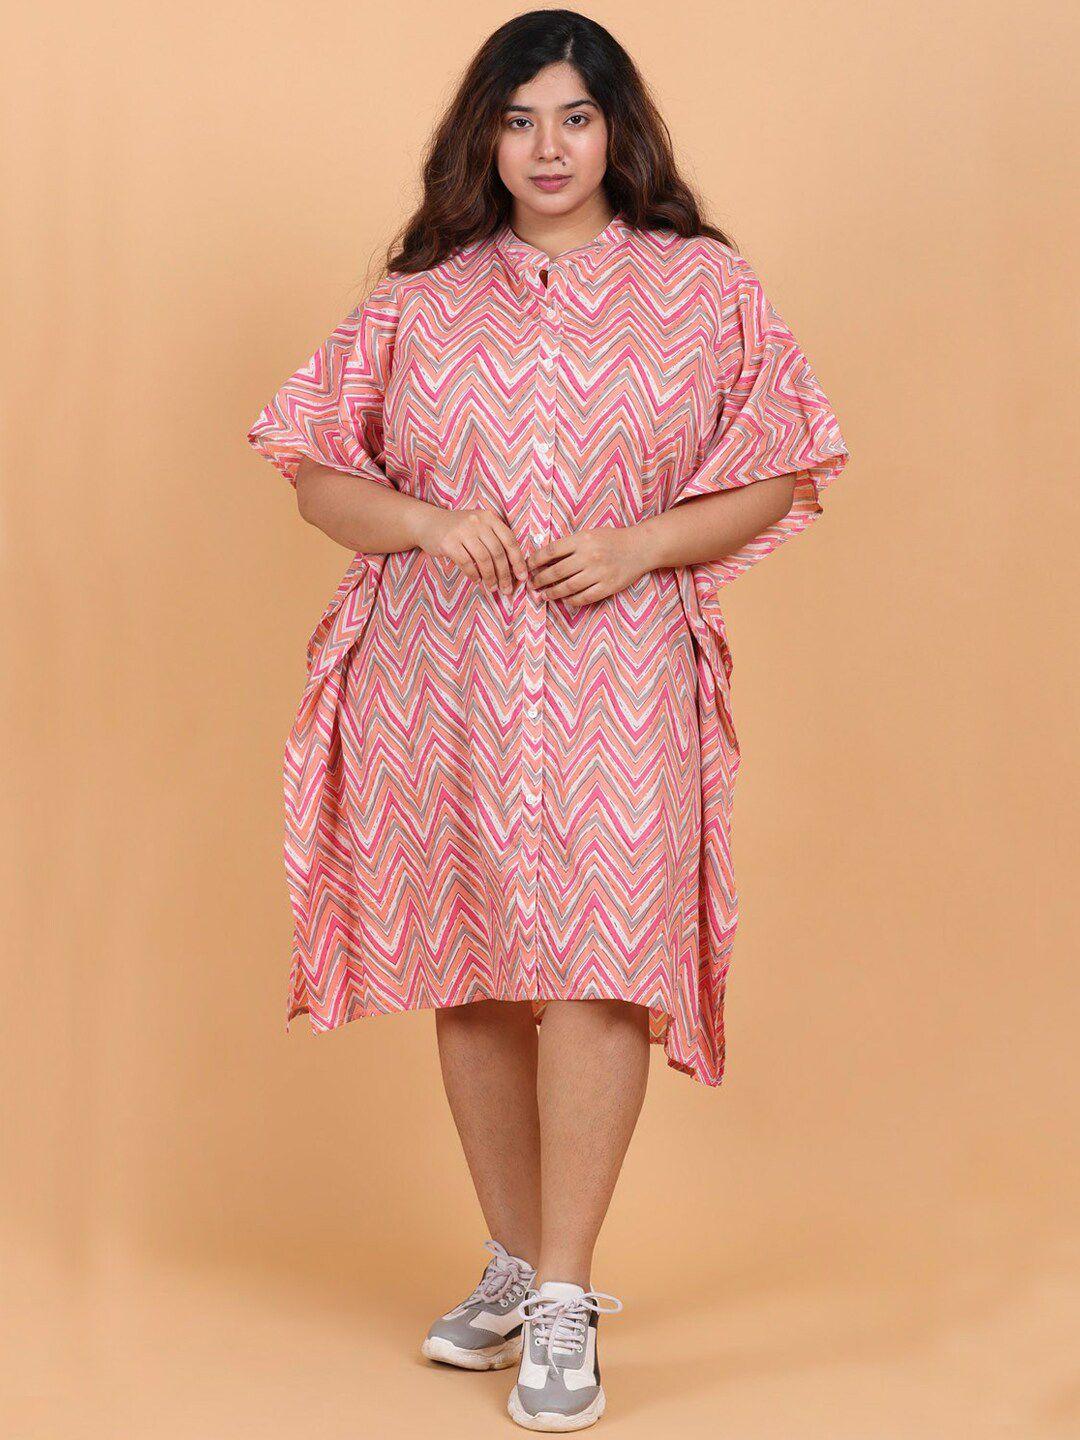 lastinch pink & white kaftan dress